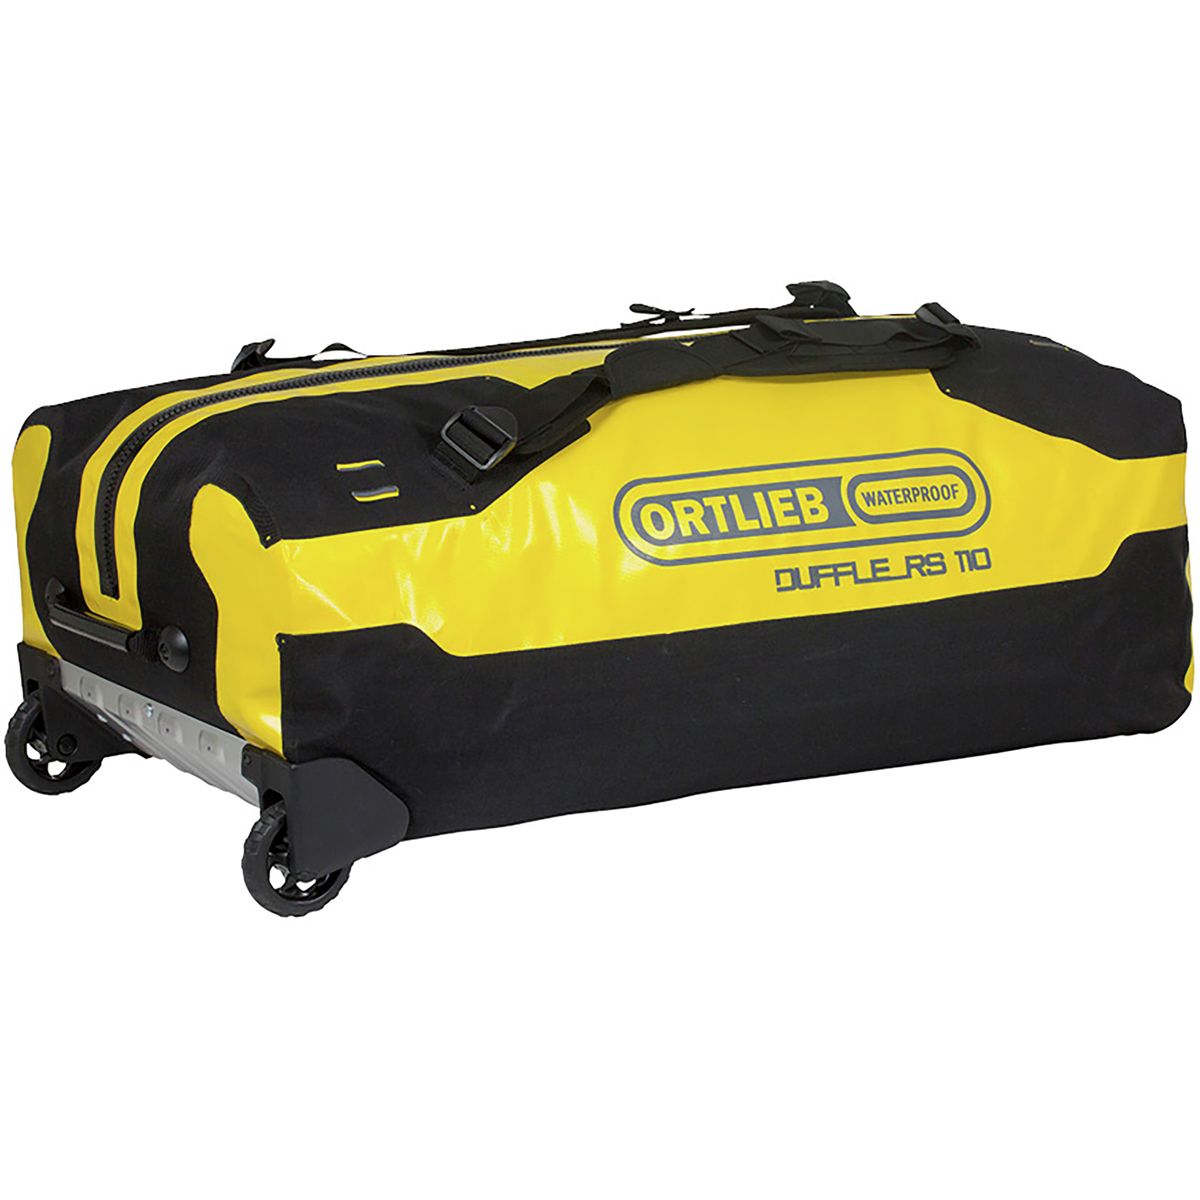 Ortlieb Roller System 110L Duffel Sun Yellow/Black, One Size